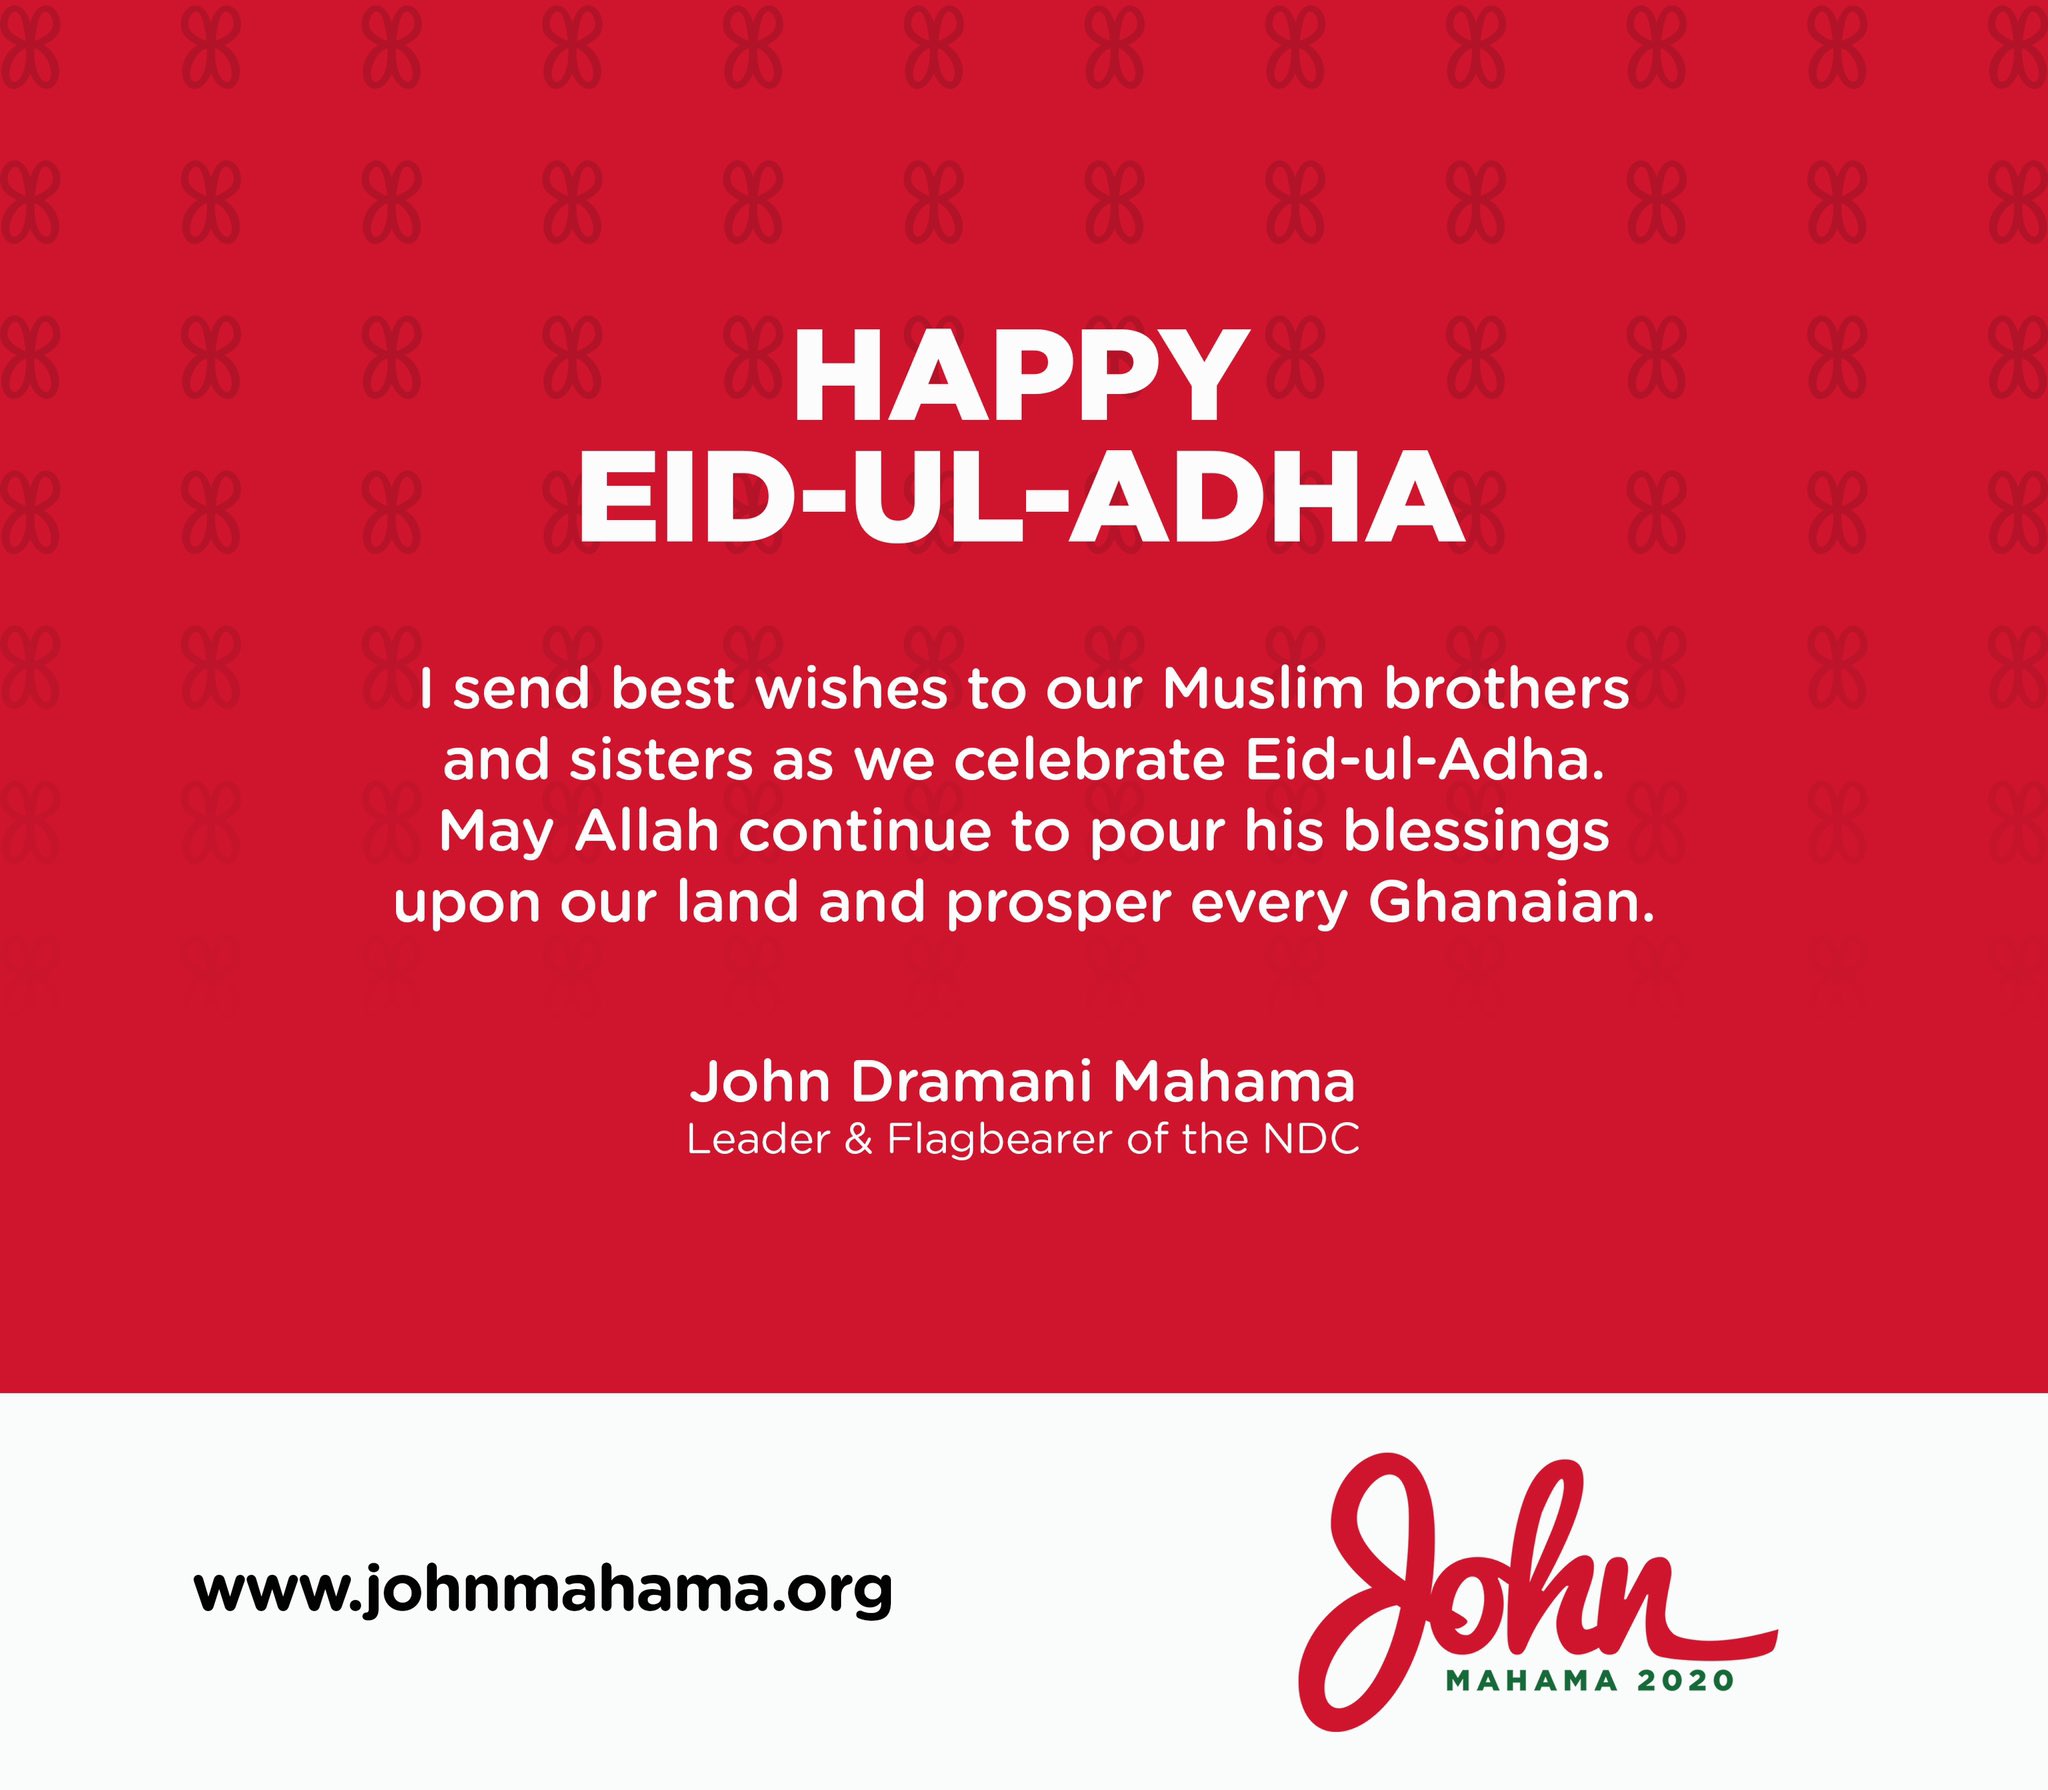 Mahama wishes Muslims well as they celebrate Eid-Ul-Adha